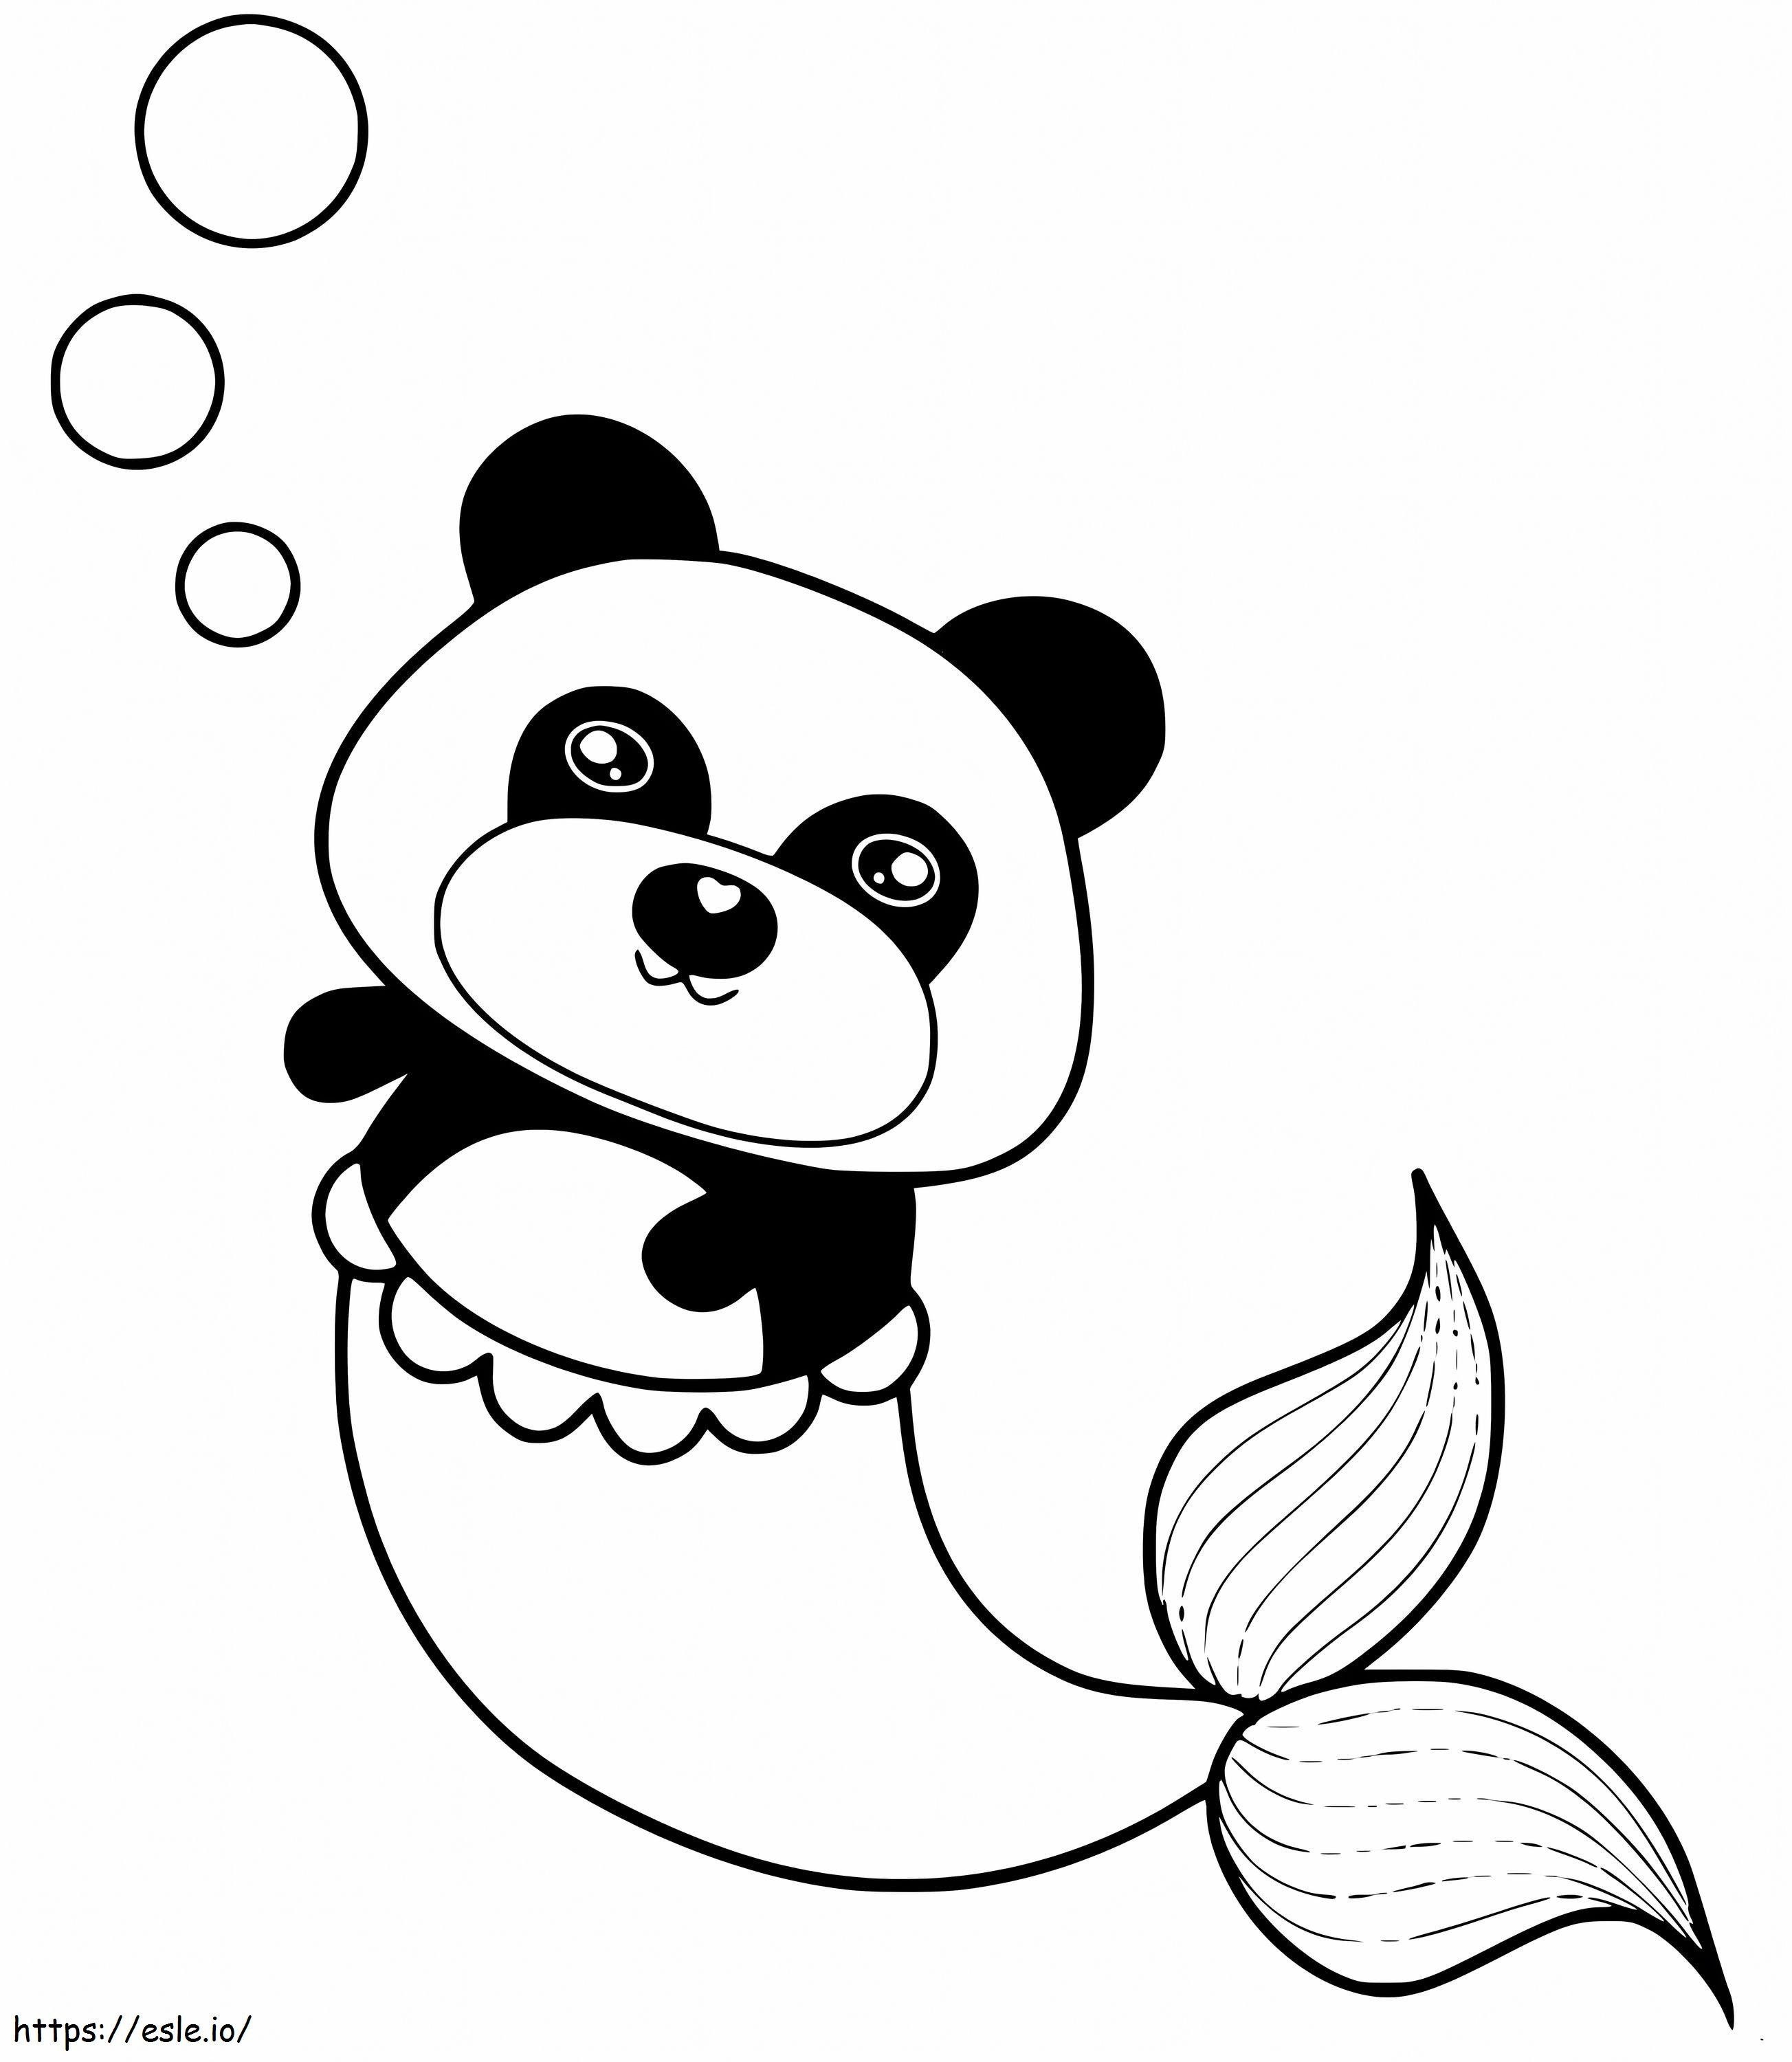 Panda Meerjungfrau 1 ausmalbilder